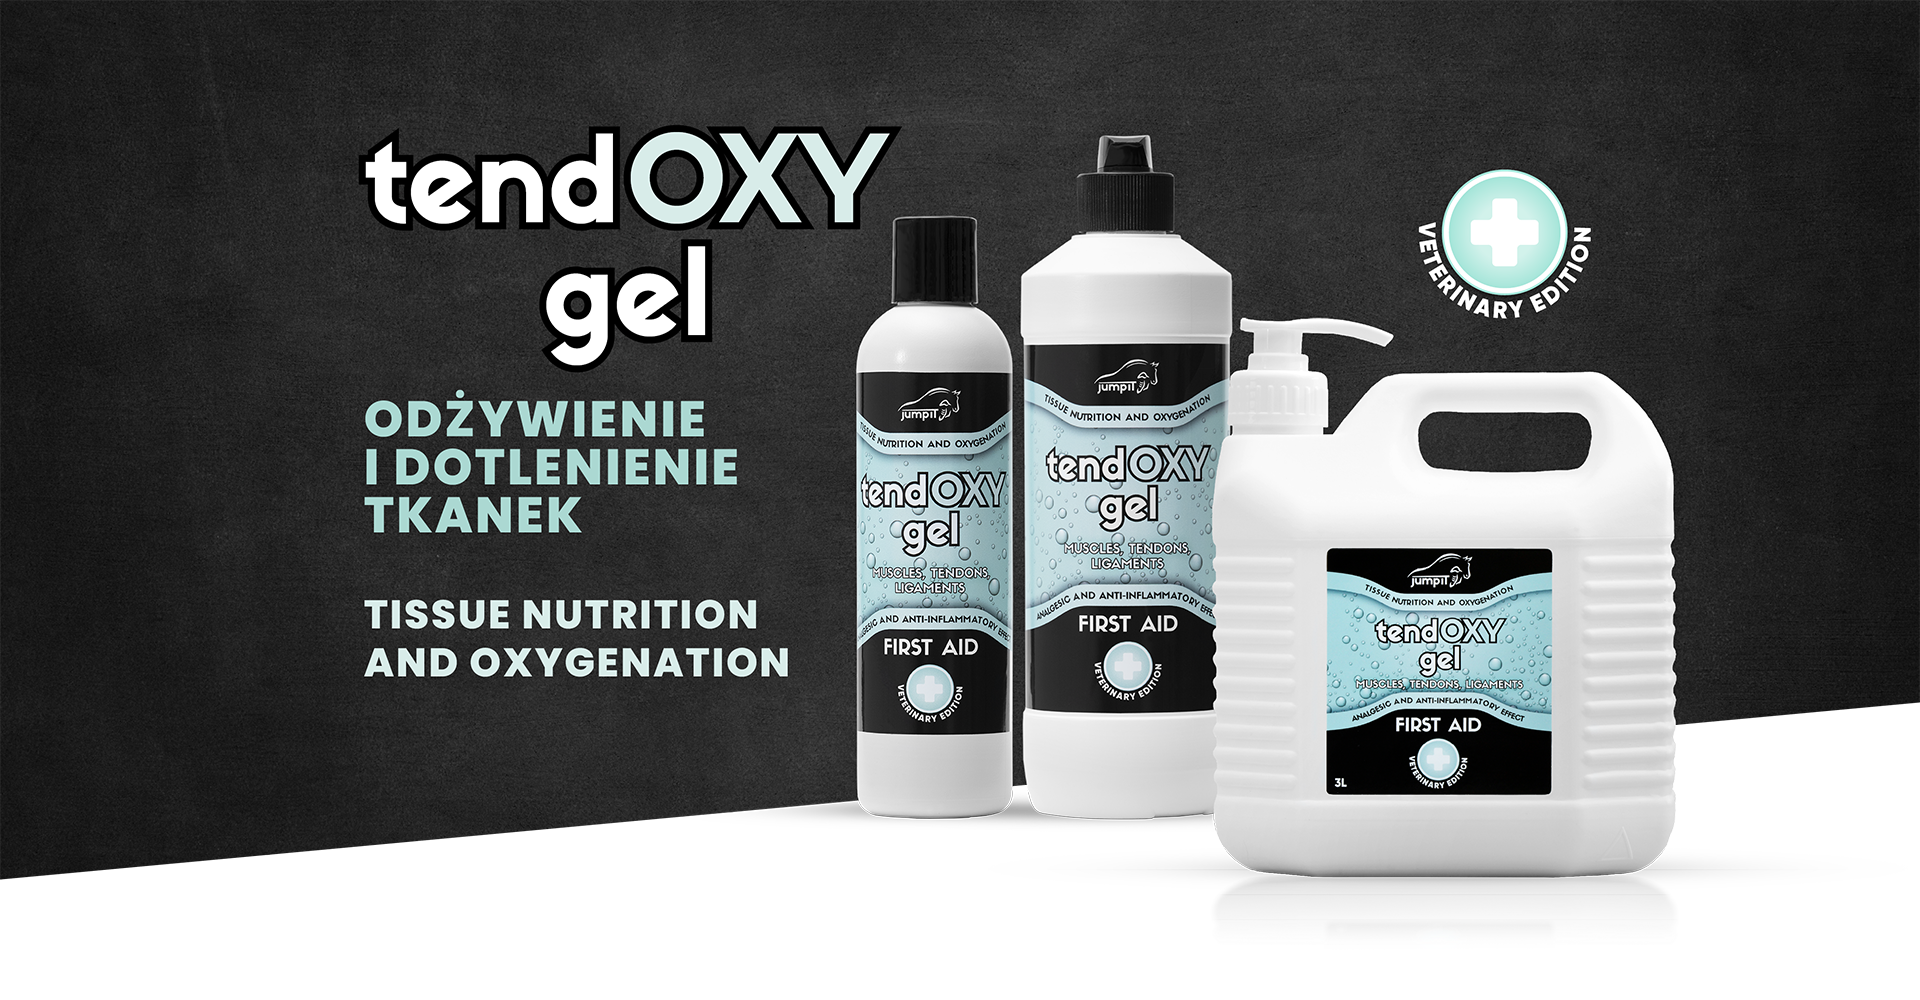 tendOXY gel